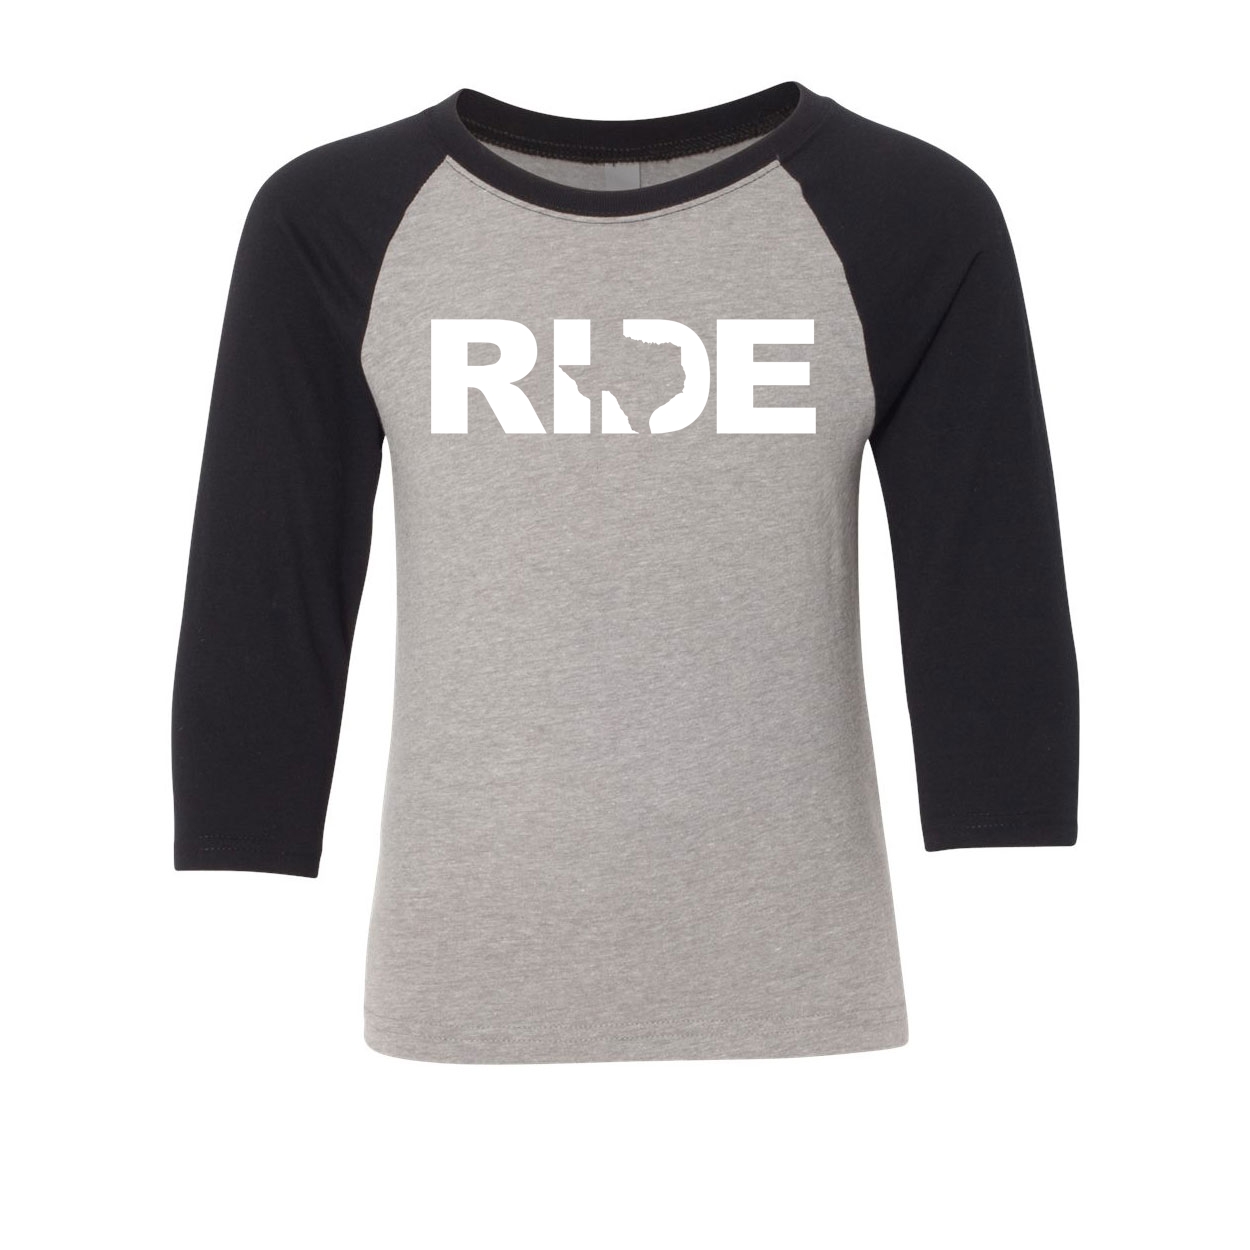 Ride Texas Classic Youth Premium Raglan Shirt Gray/Black (White Logo)